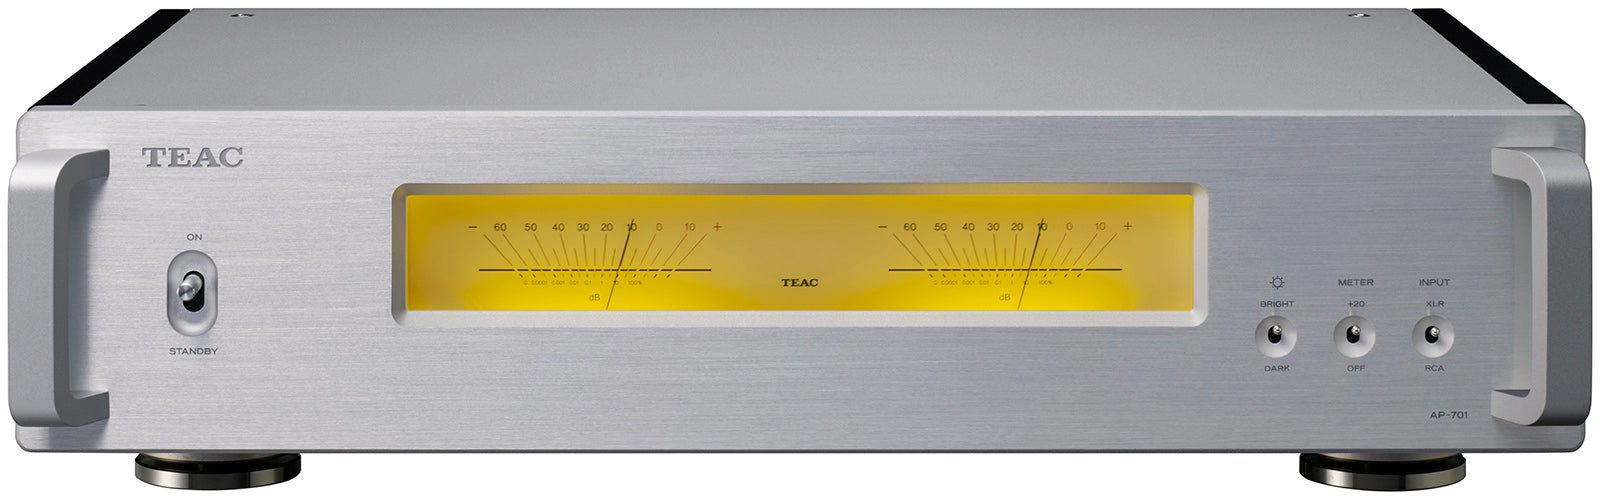 Teac AP-701-S finale dual mono stereo 260+260 watt